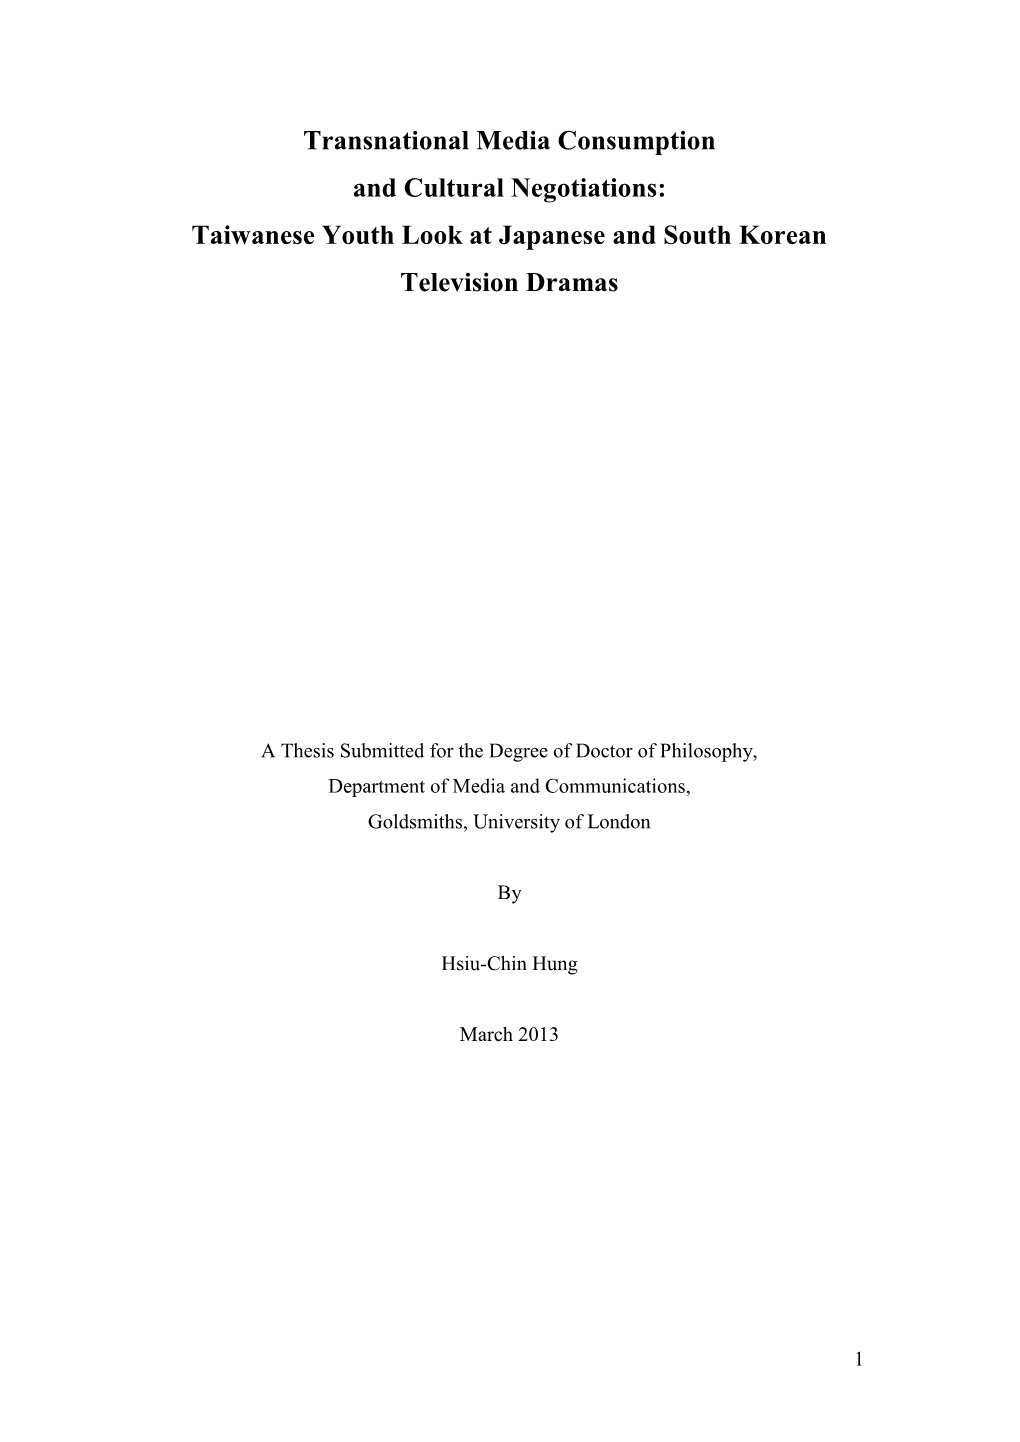 Transnational Media Consumption and Cultural Negotiations: Taiwanese Youth Look at Japanese and South Korean Television Dramas